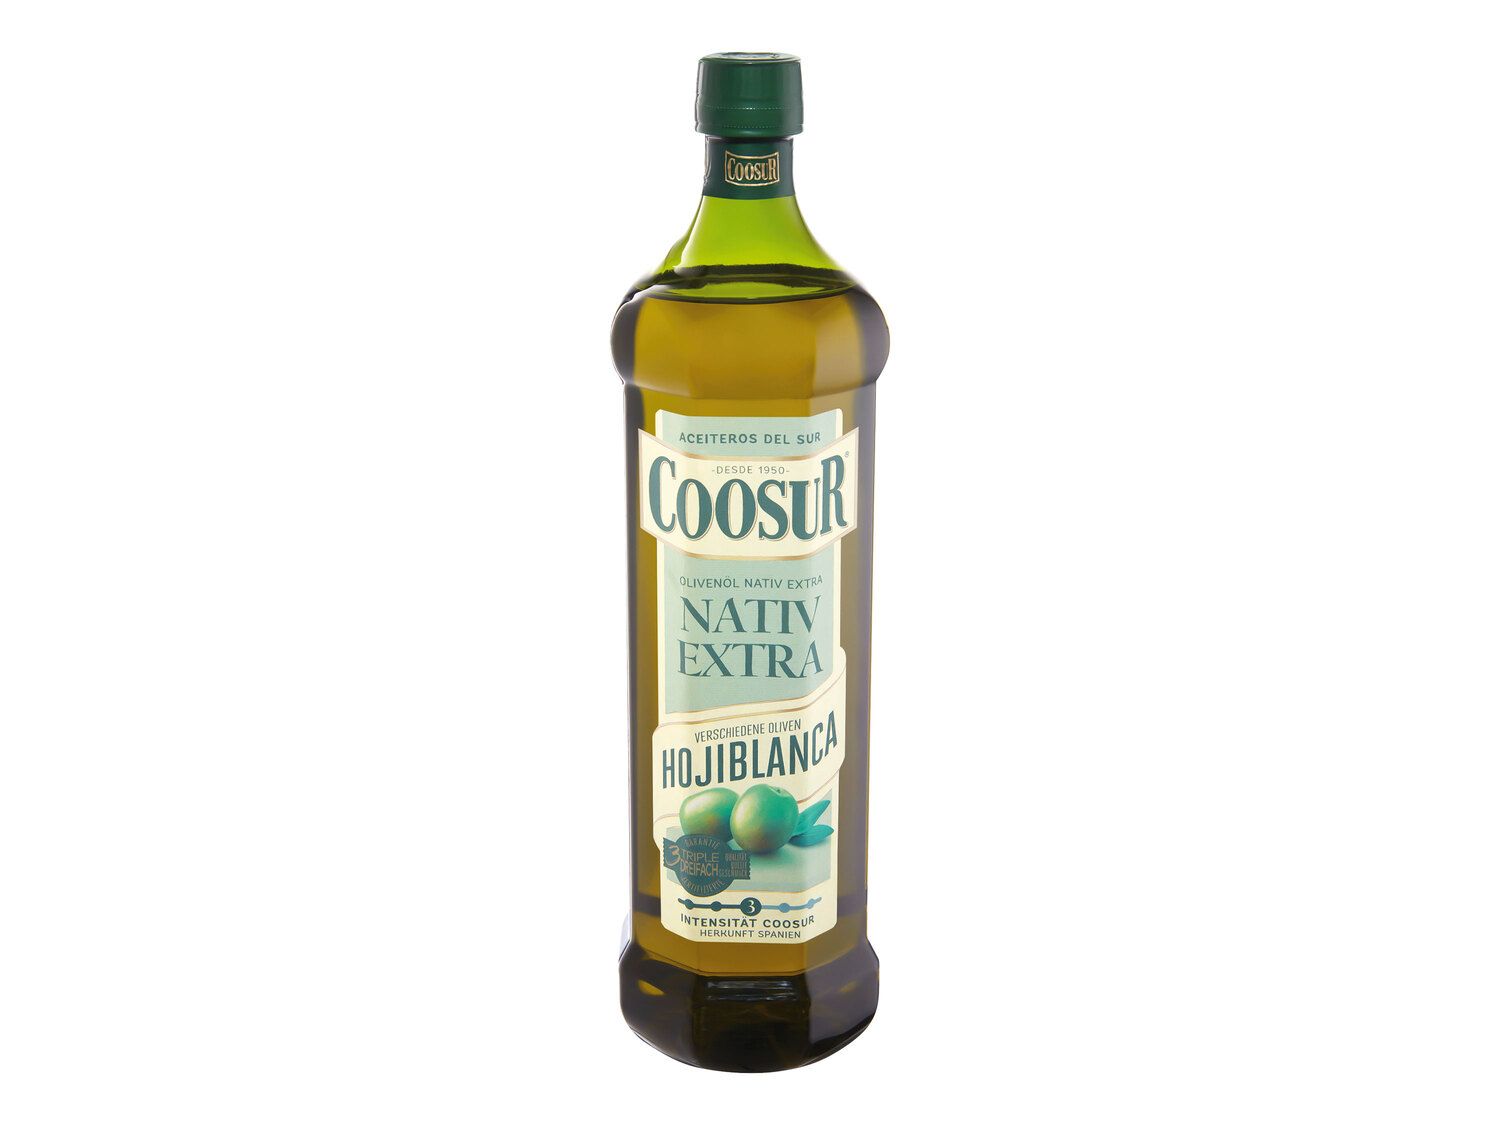 Coosur Olivenöl Deutschland Lidl - Hojiblanca